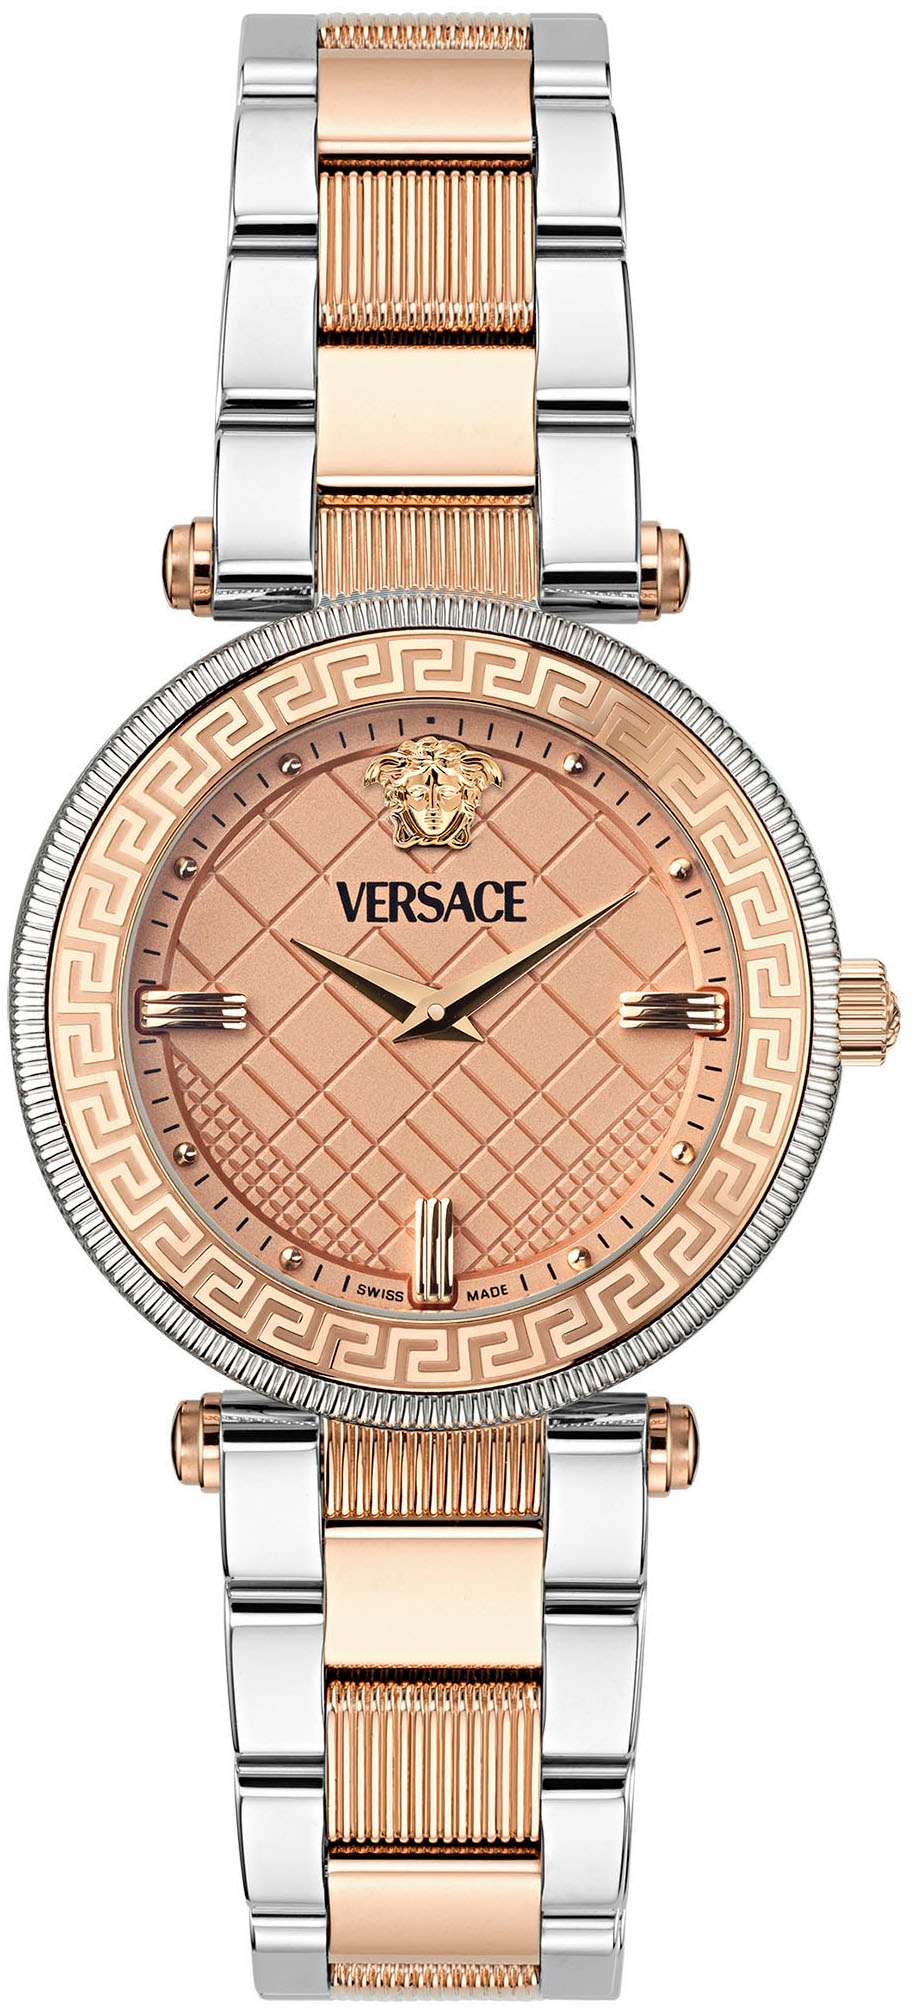 Versace Quarzuhr »REVE«, Armbanduhr, Damenuhr, Saphirglas, Swiss Made, analog